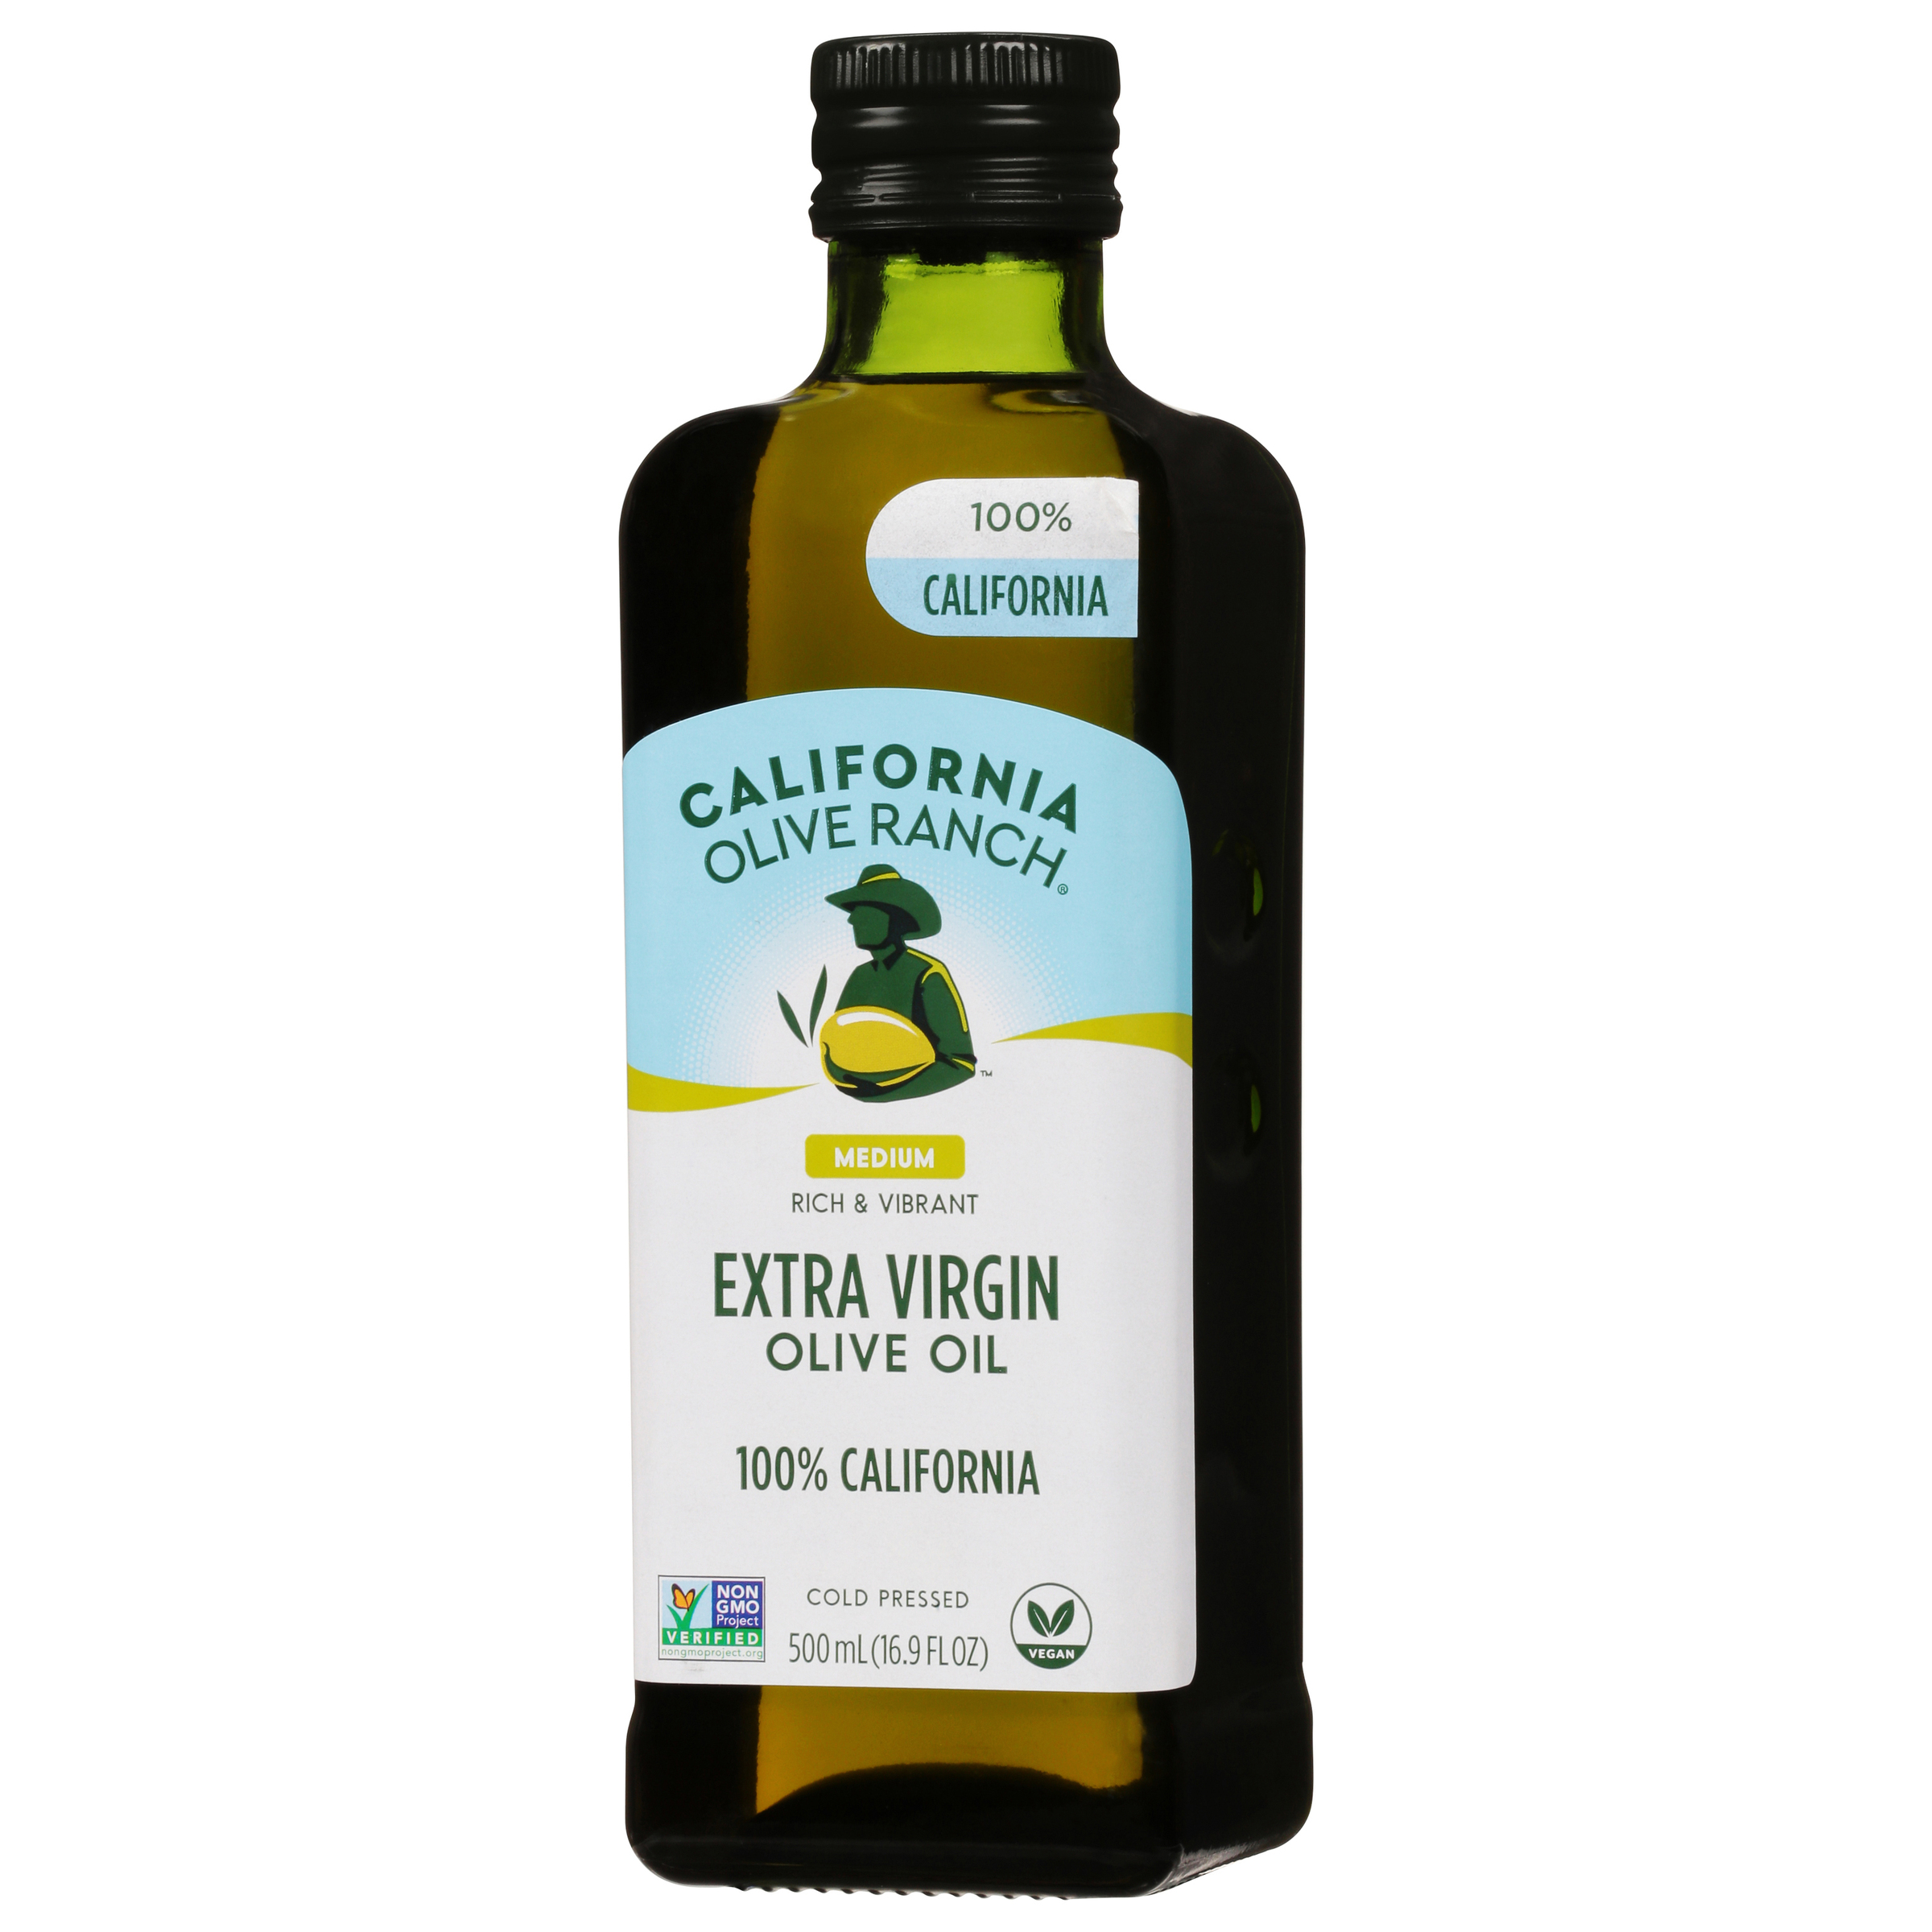 California Olive Ranch 100% California Medium Extra Virgin Olive Oil, 16.9 fl oz - image 4 of 7